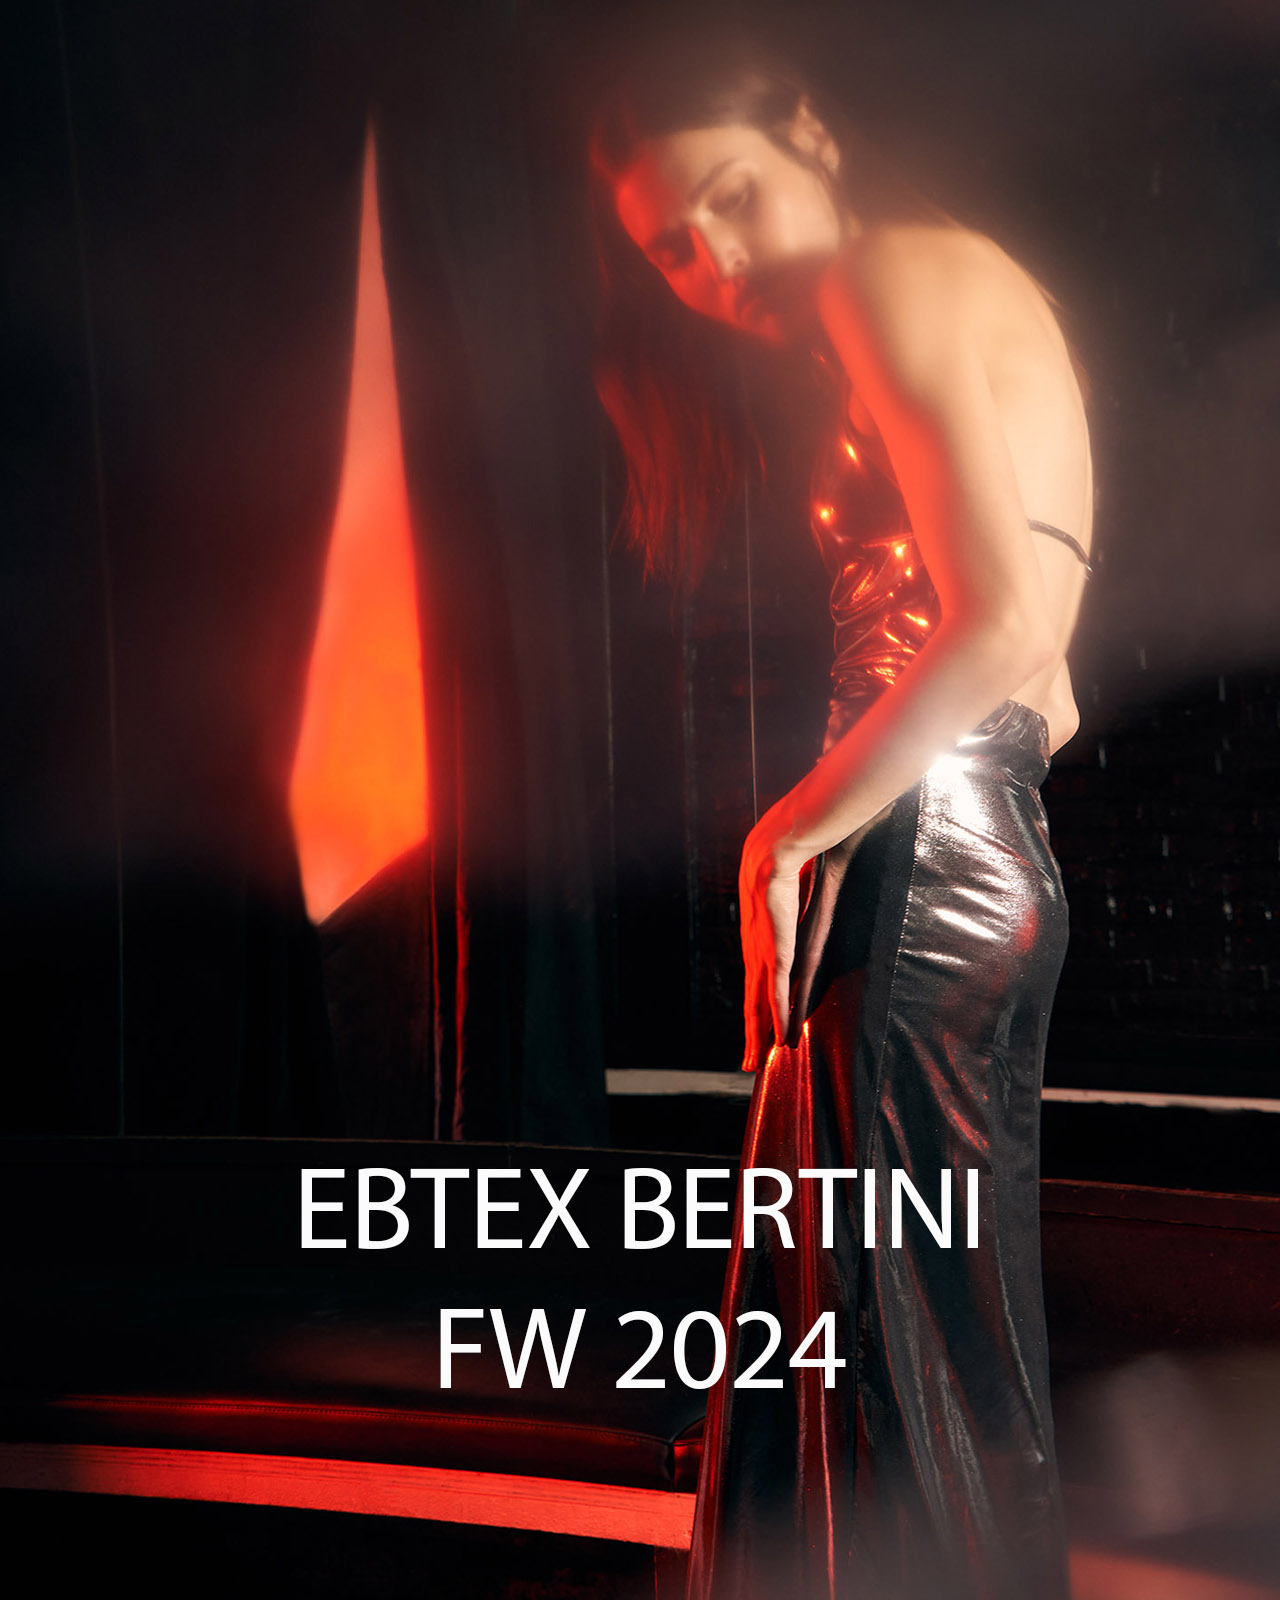 EBTEX BERTINI FW 24 BY ANDREA REINA